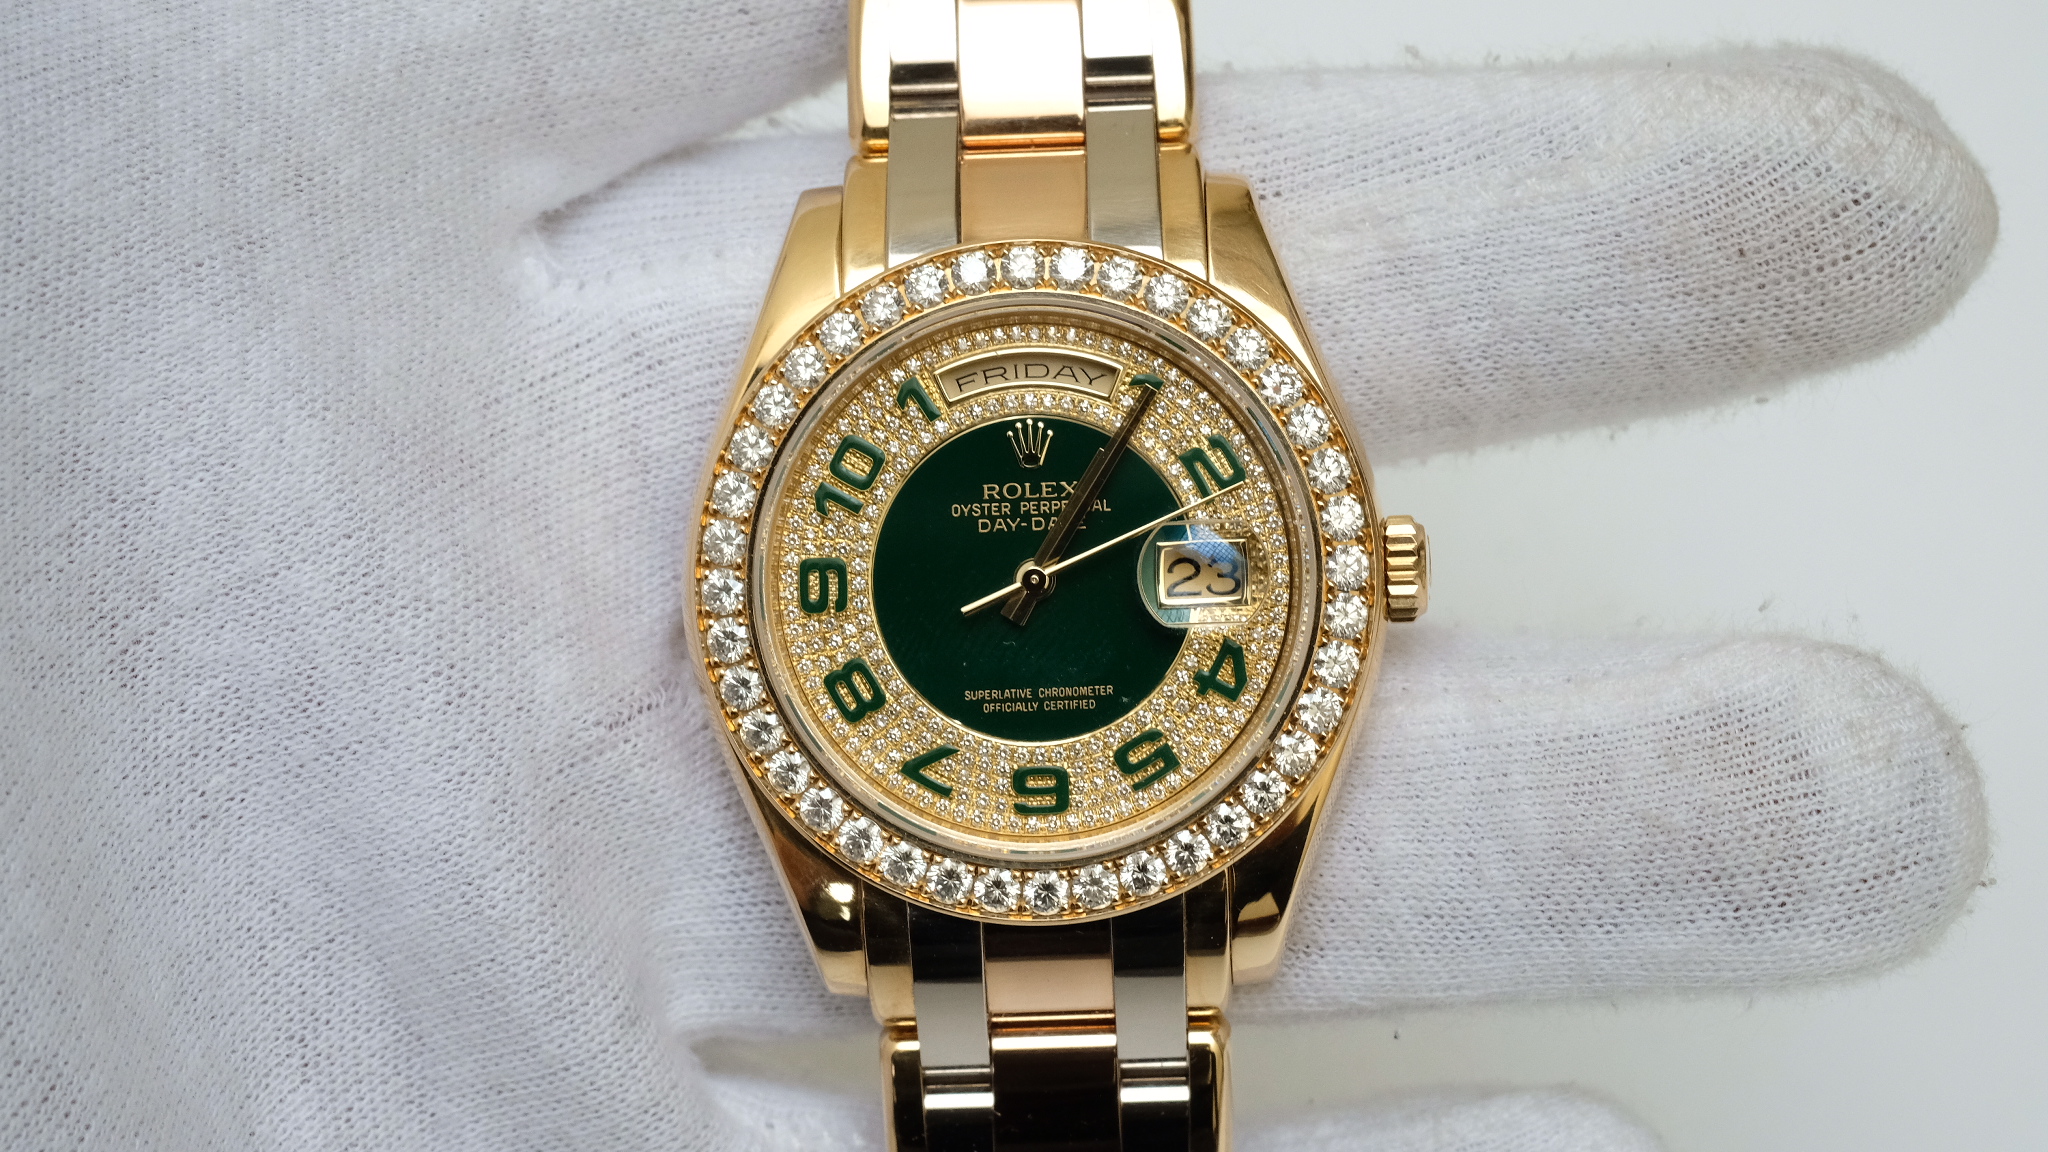 Đồng hồ Rolex Day-Date 18948 mặt xanh lá nạm kim cương size 39mm